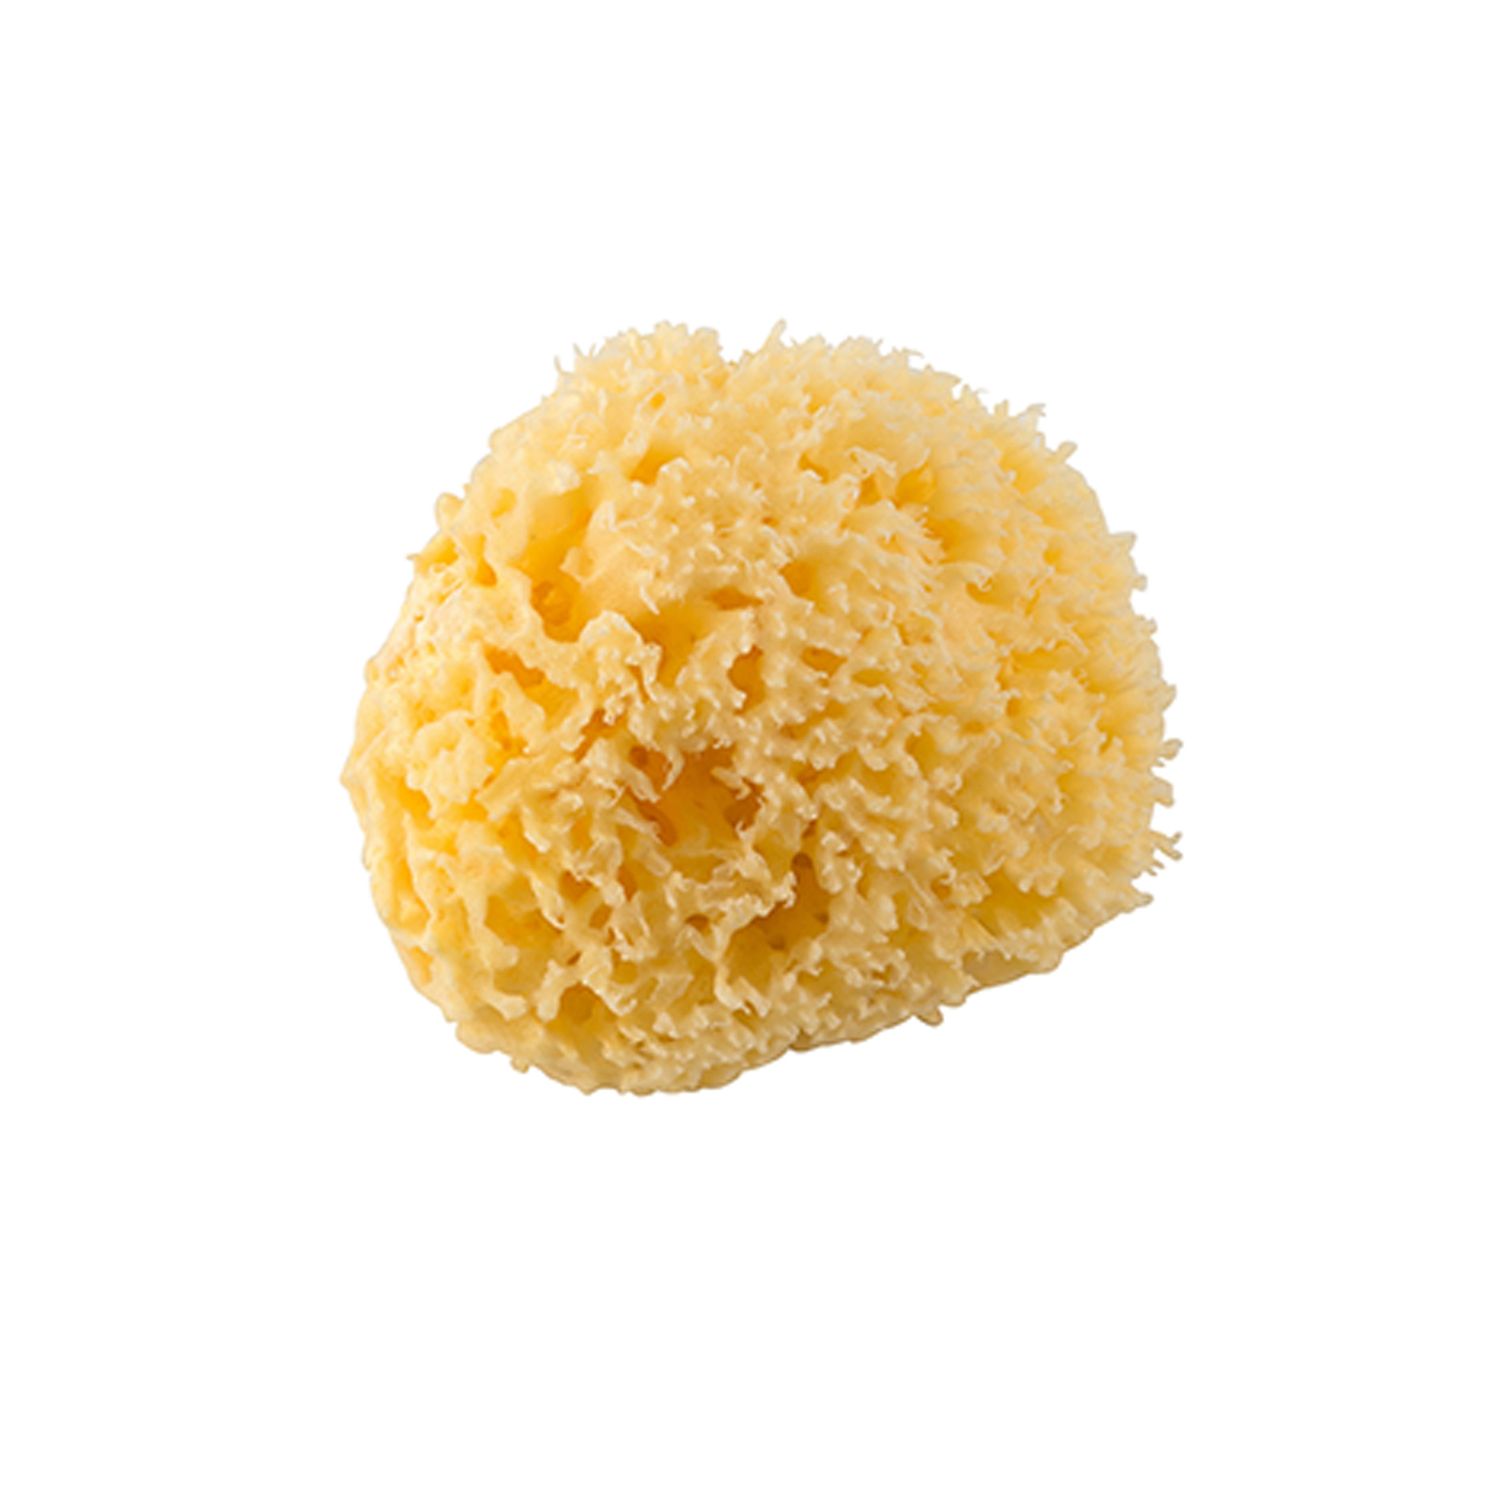 Mediterranean sponge